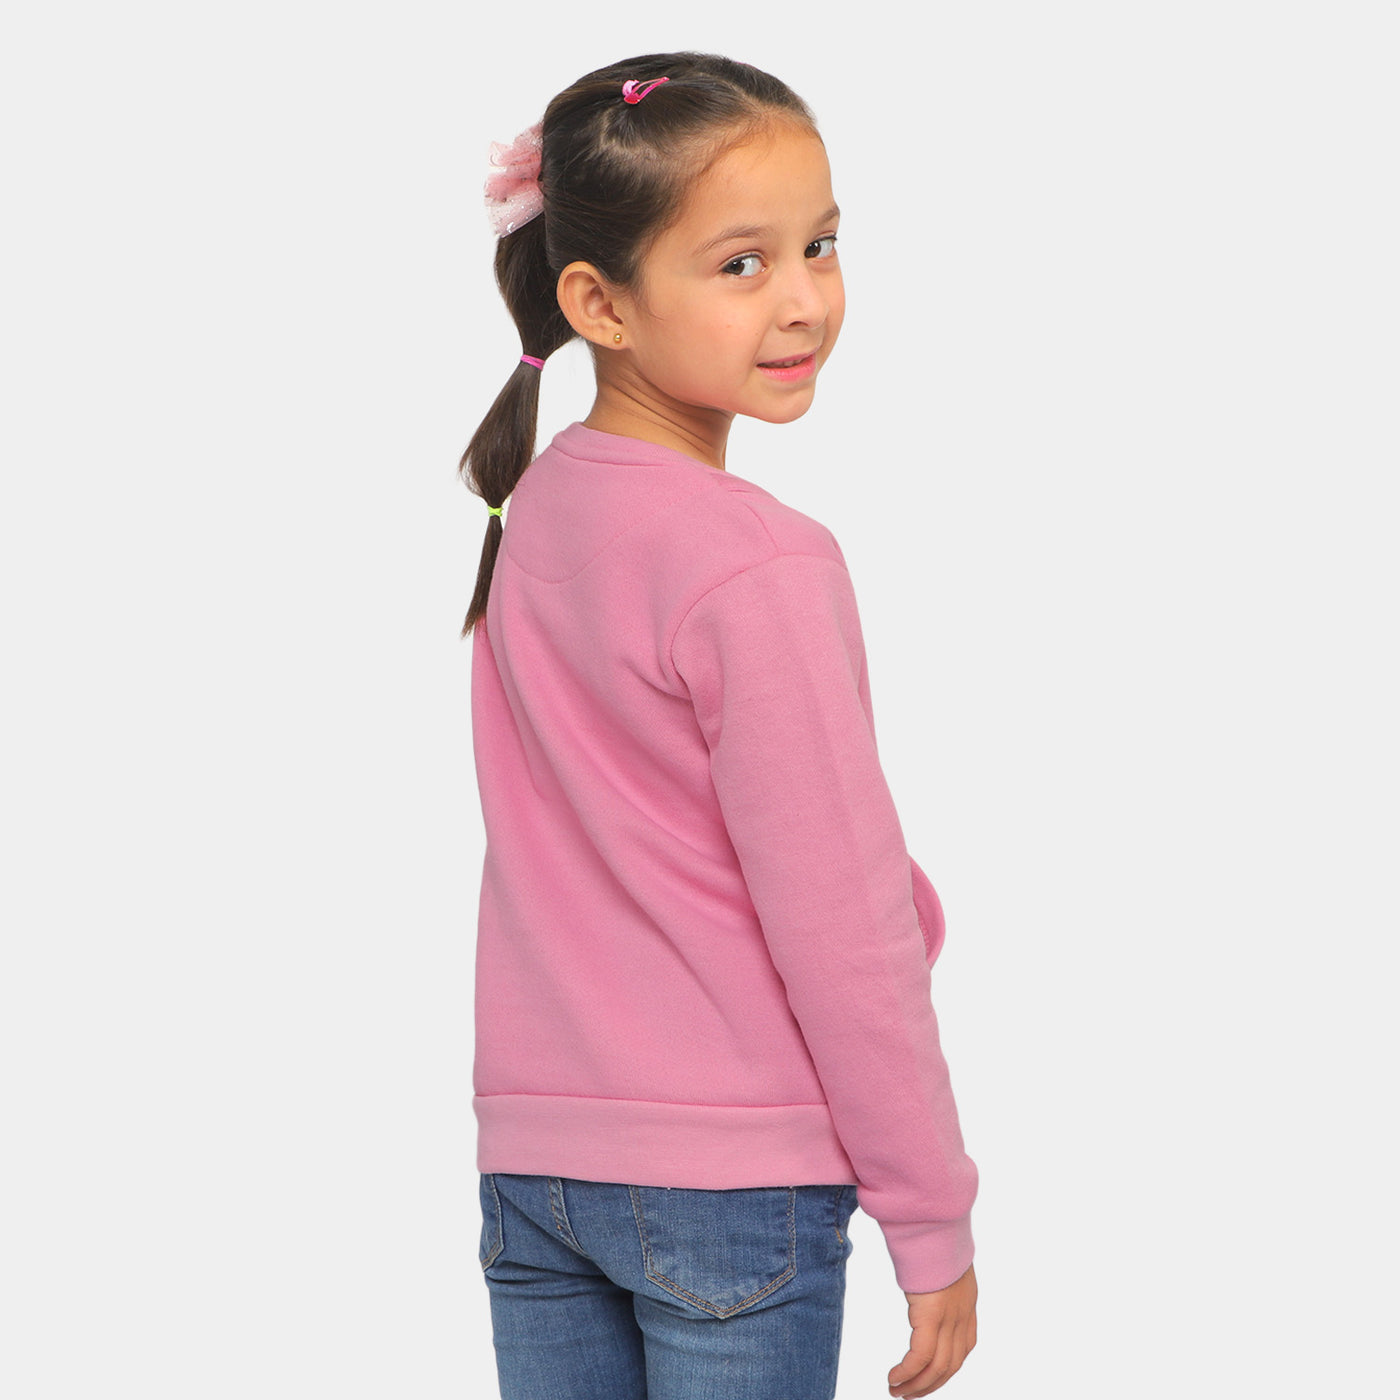 Girls Sweatshirt Cartoon Character-Pink